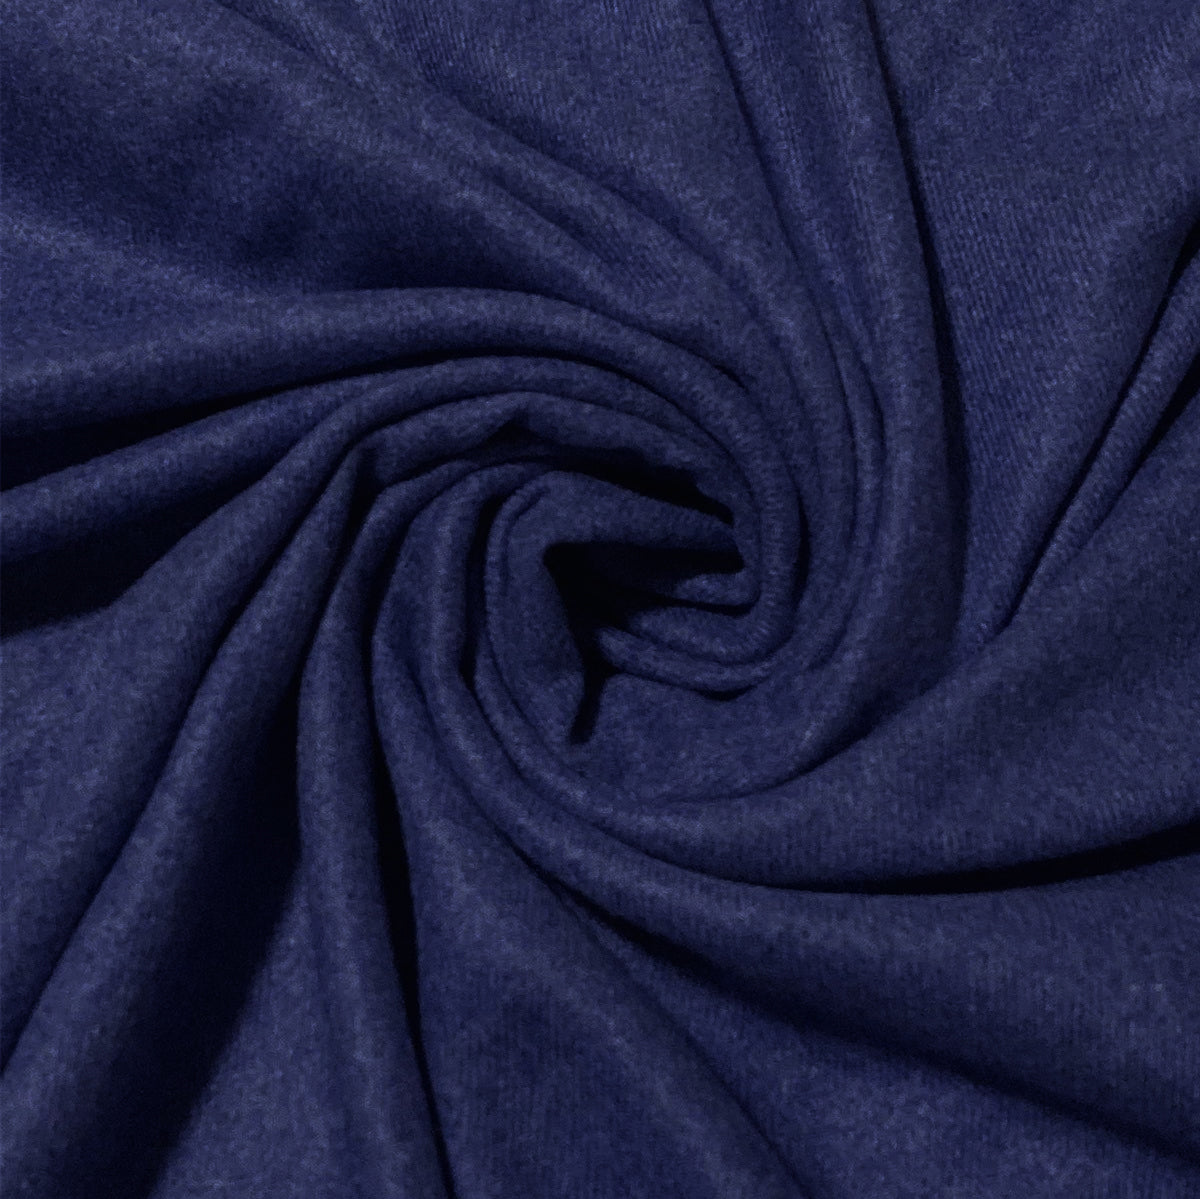 Bufanda de cachemira 100% pashmina auténtica 70 x 170 cm, azul marino